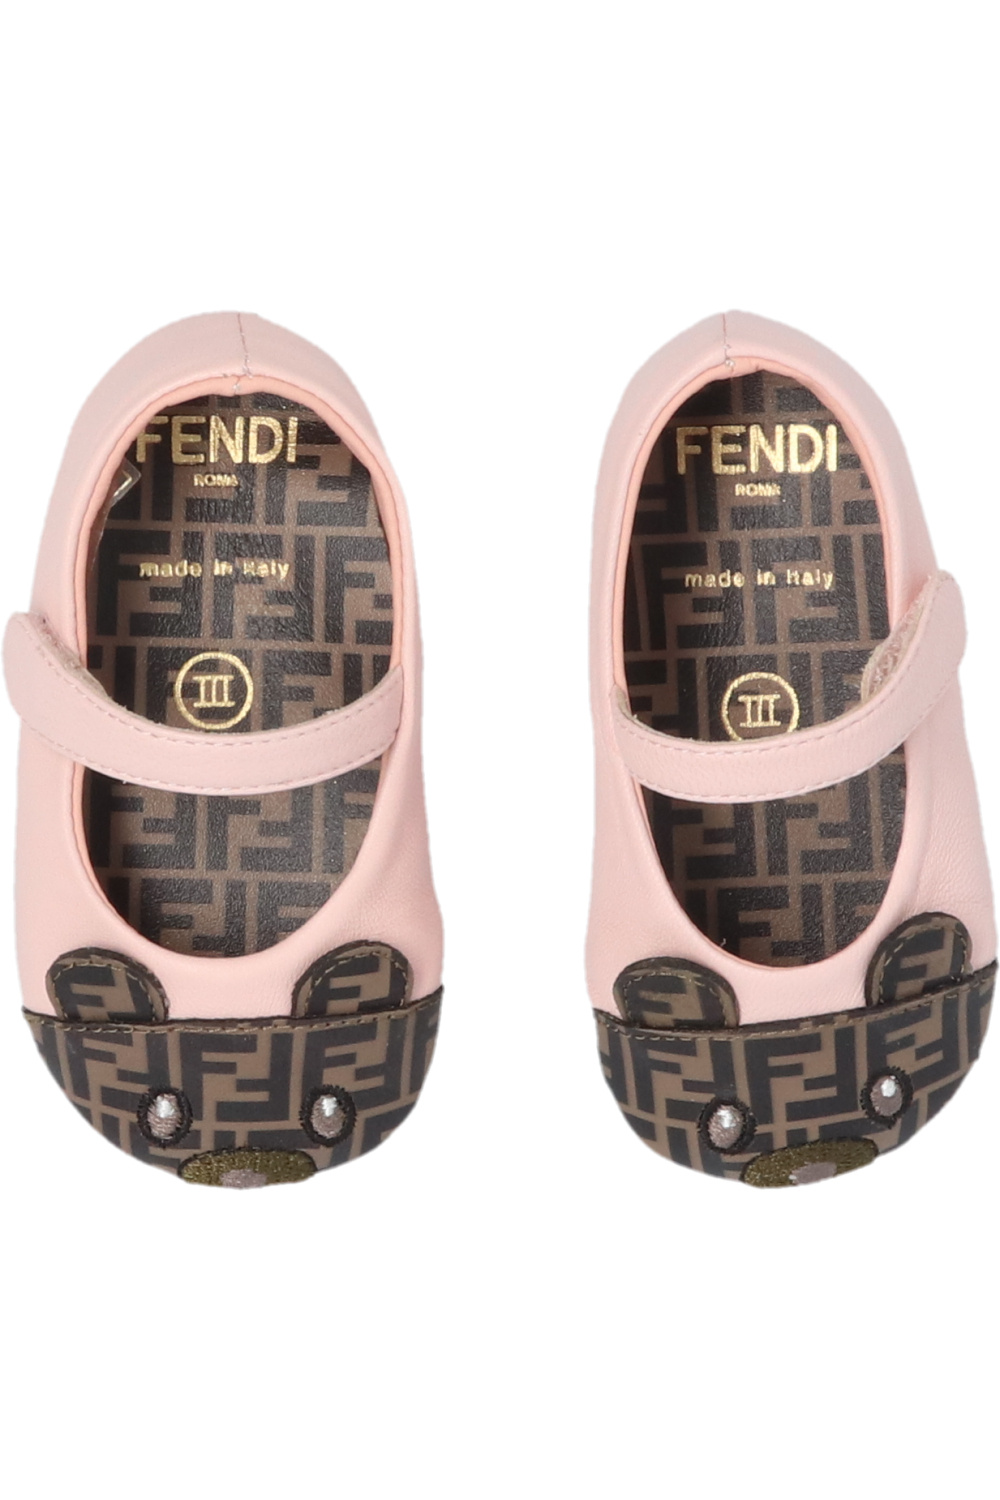 Fendi Kids Leather shoes